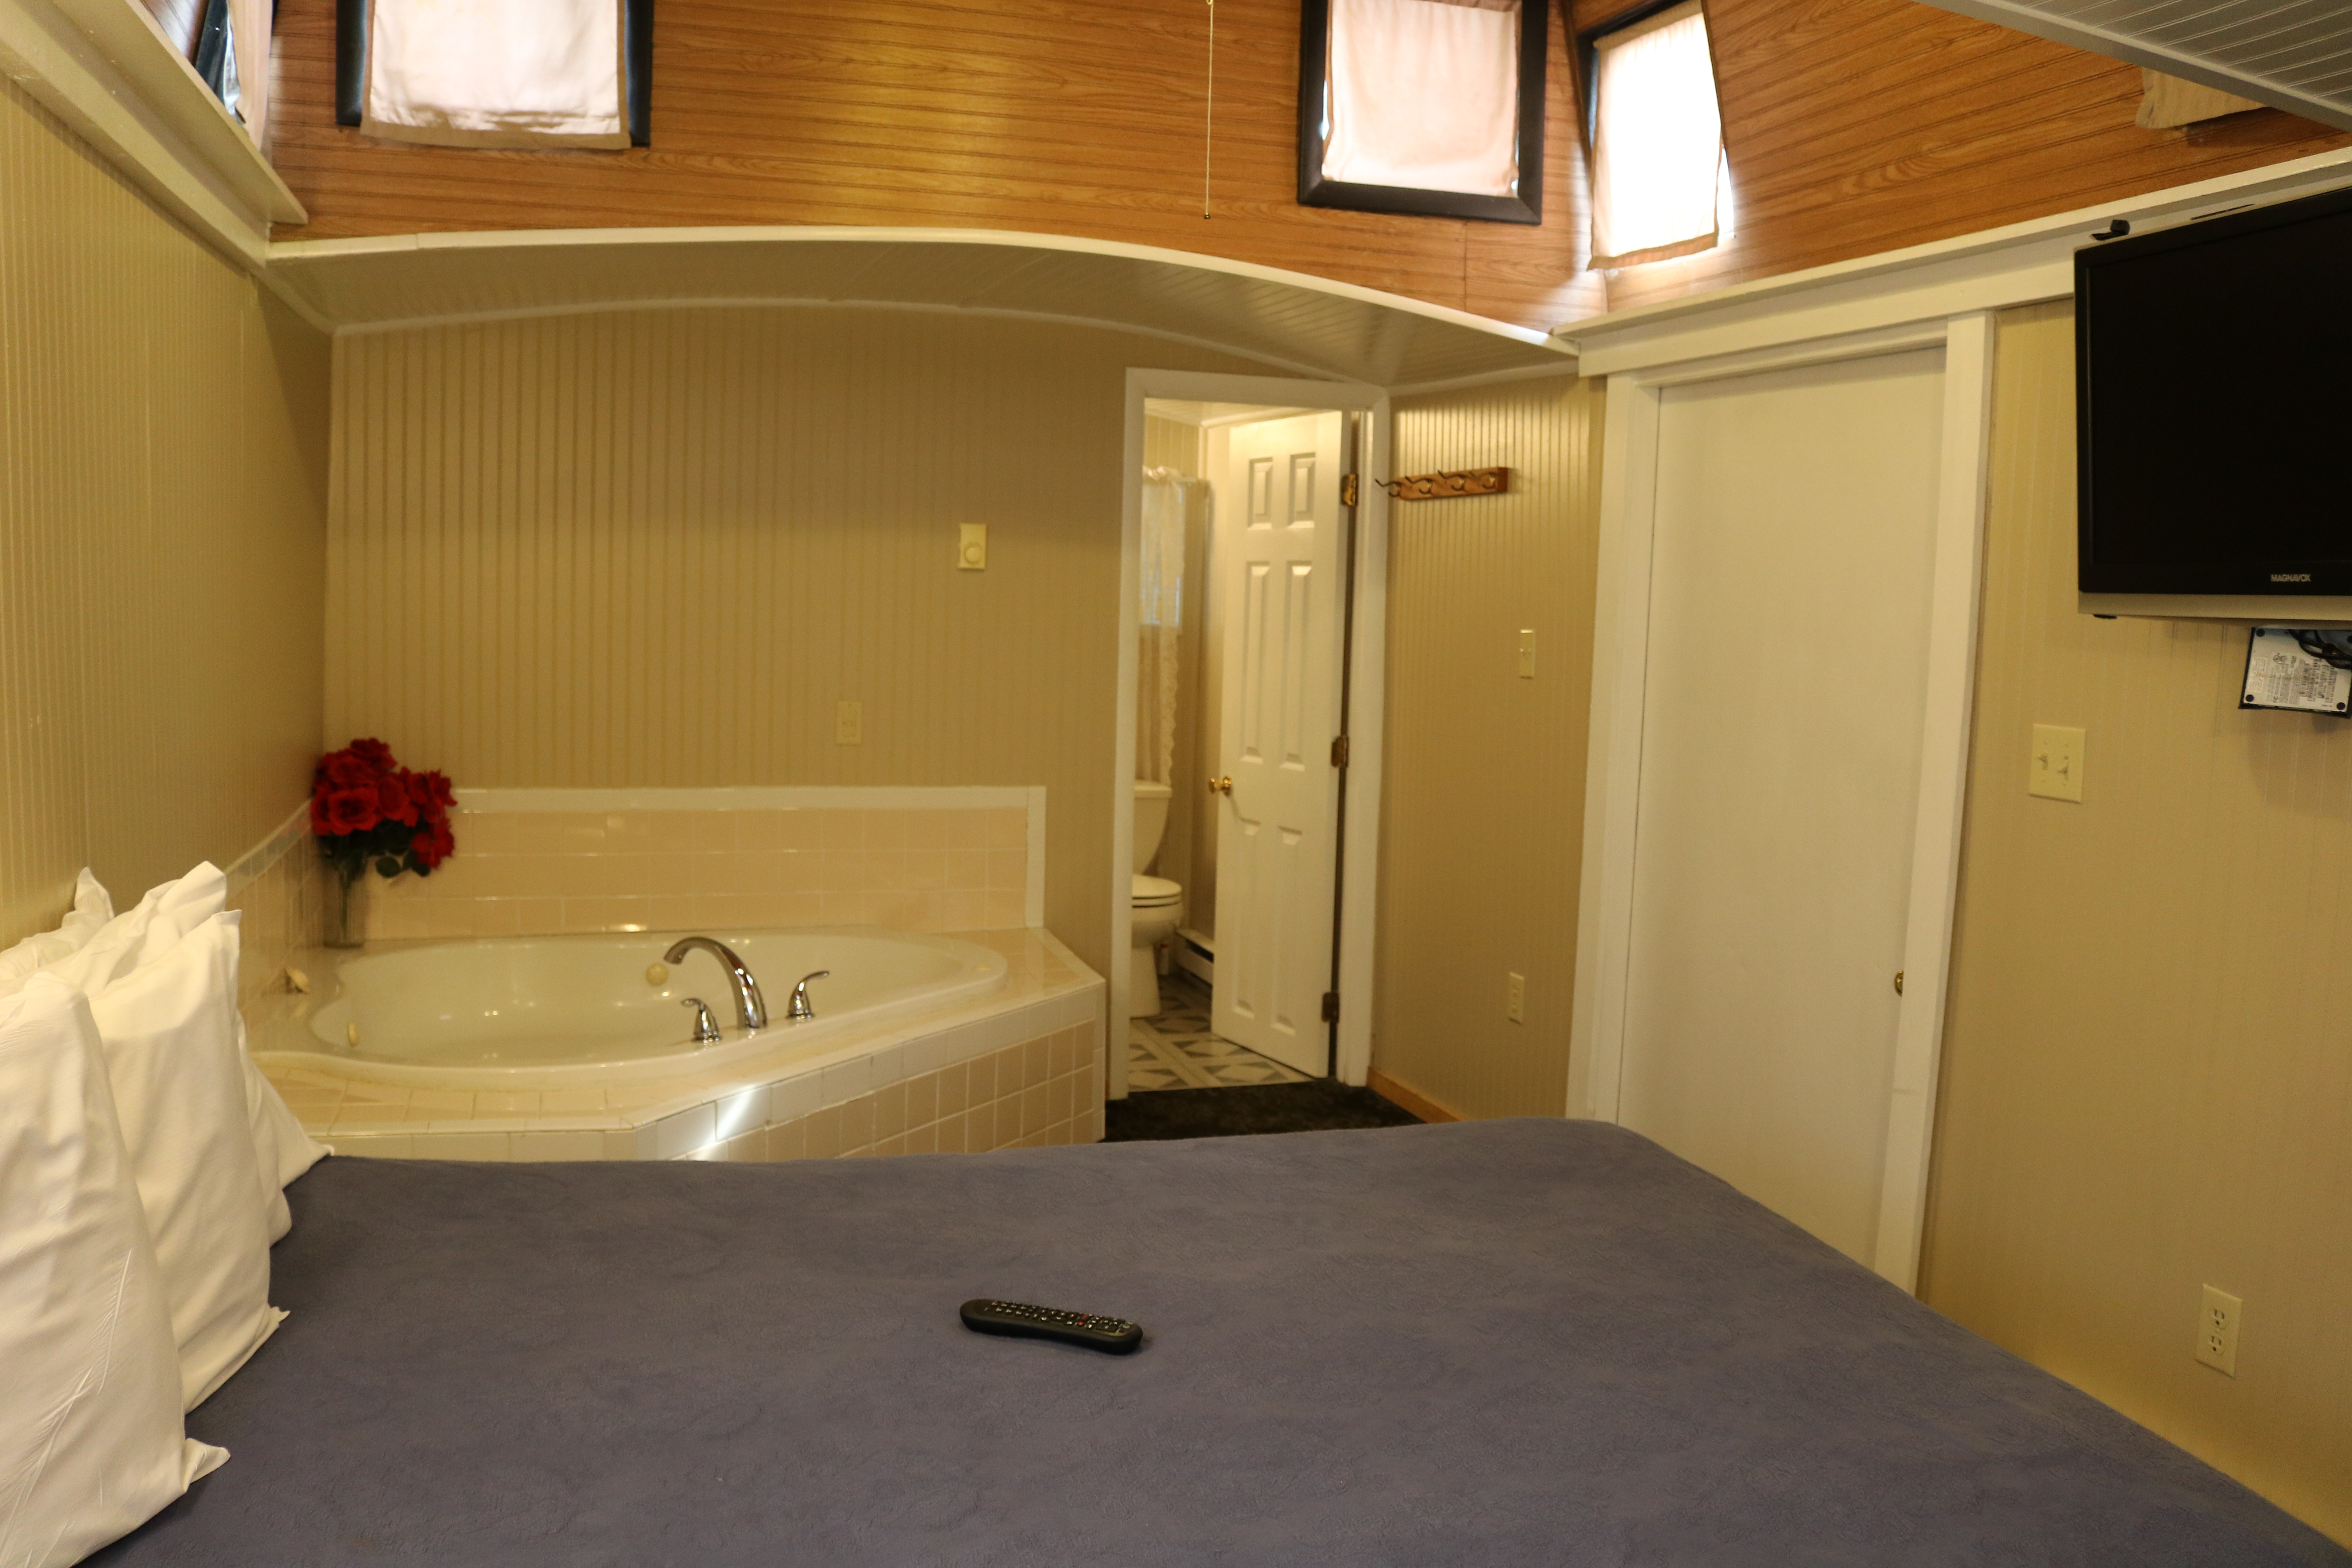 interior view of honeymoon caboose motel room